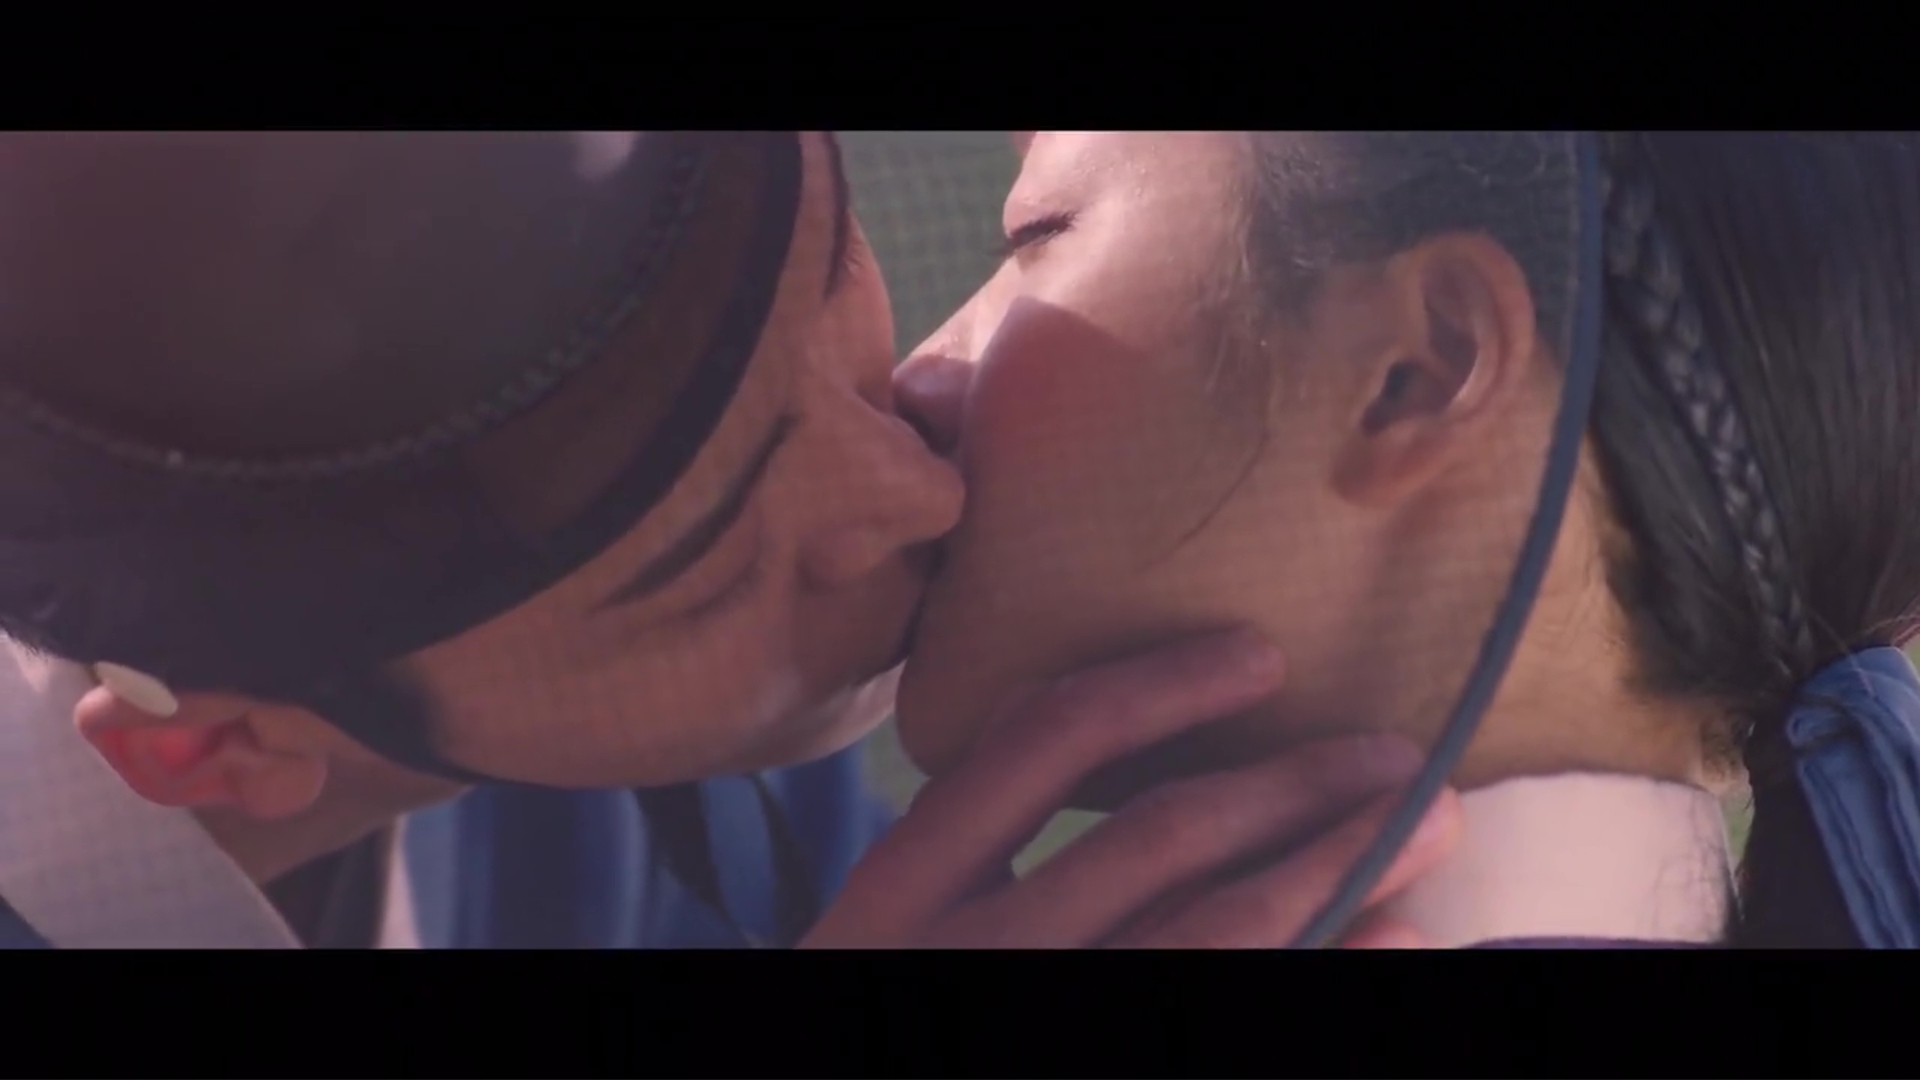 I hope that kiss has feelings. HIGH CARD EPISODE 11 REACTION VIDEO